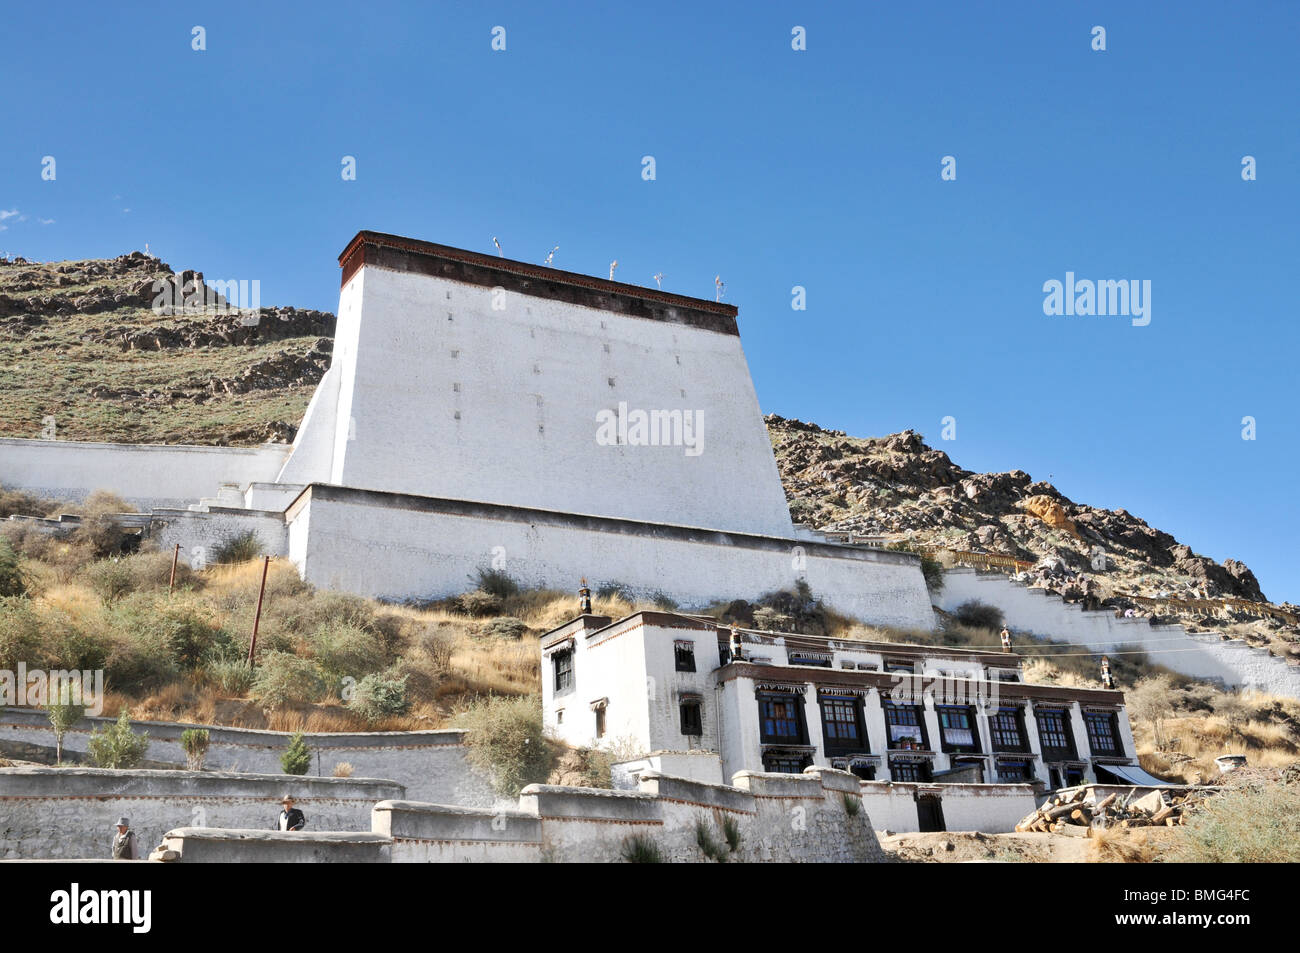 La arquitectura tibetana Shaifotai utilizado para la inauguración del Buda Gigante, el monasterio de Tashilumpo Tangka, Xigaze, Tíbet, China Foto de stock